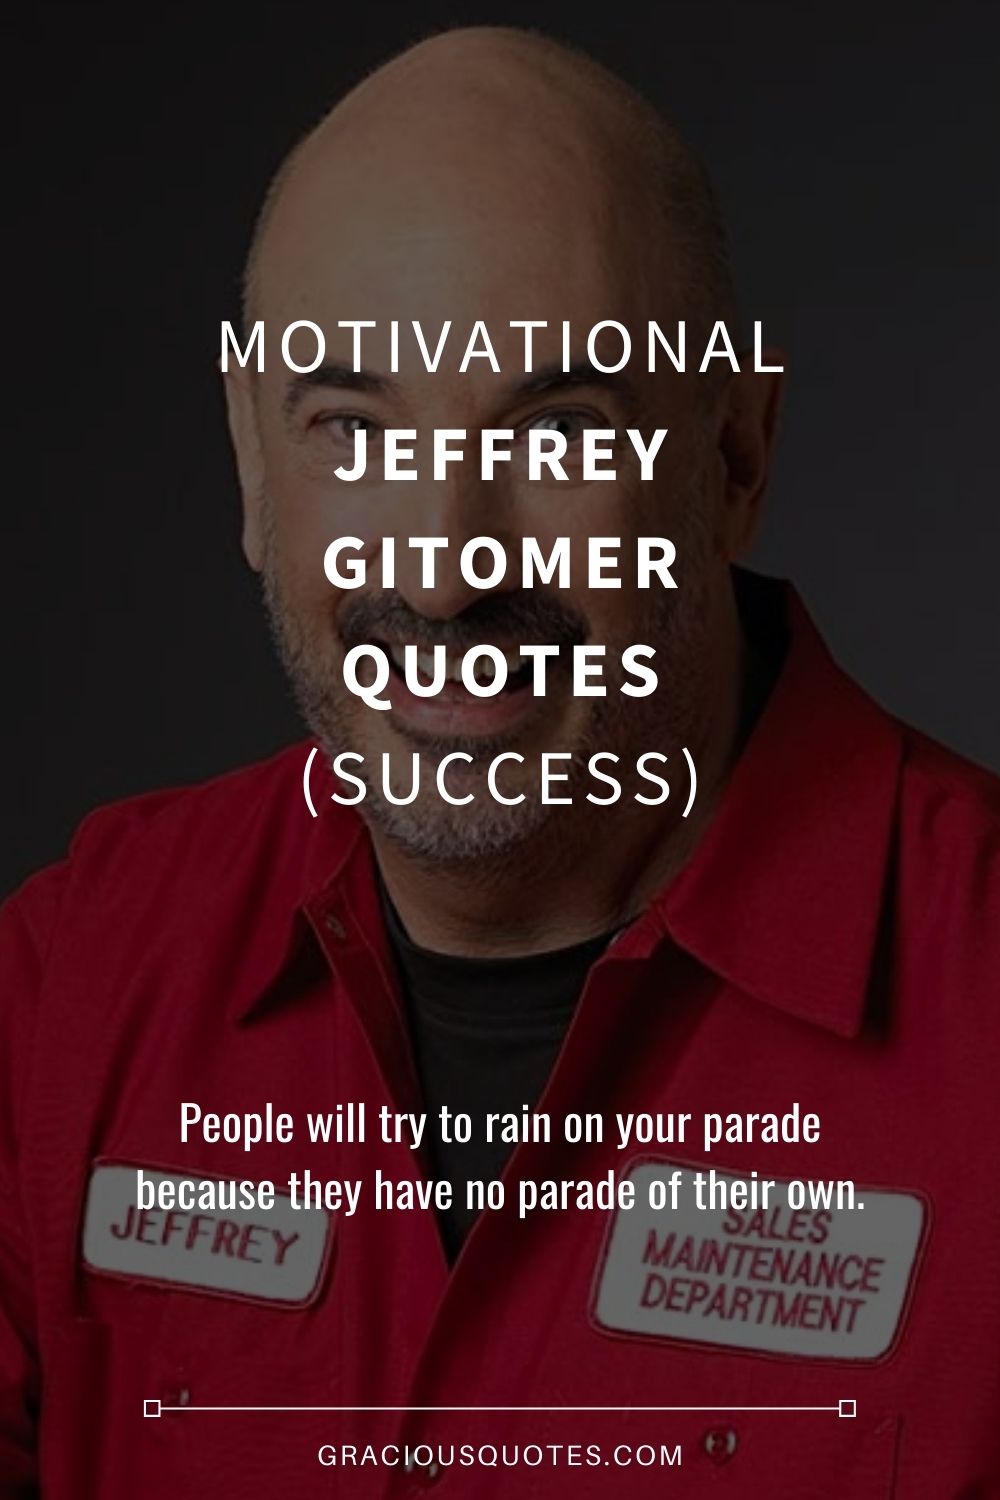 Motivational Jeffrey Gitomer Quotes (SUCCESS) - Gracious Quotes